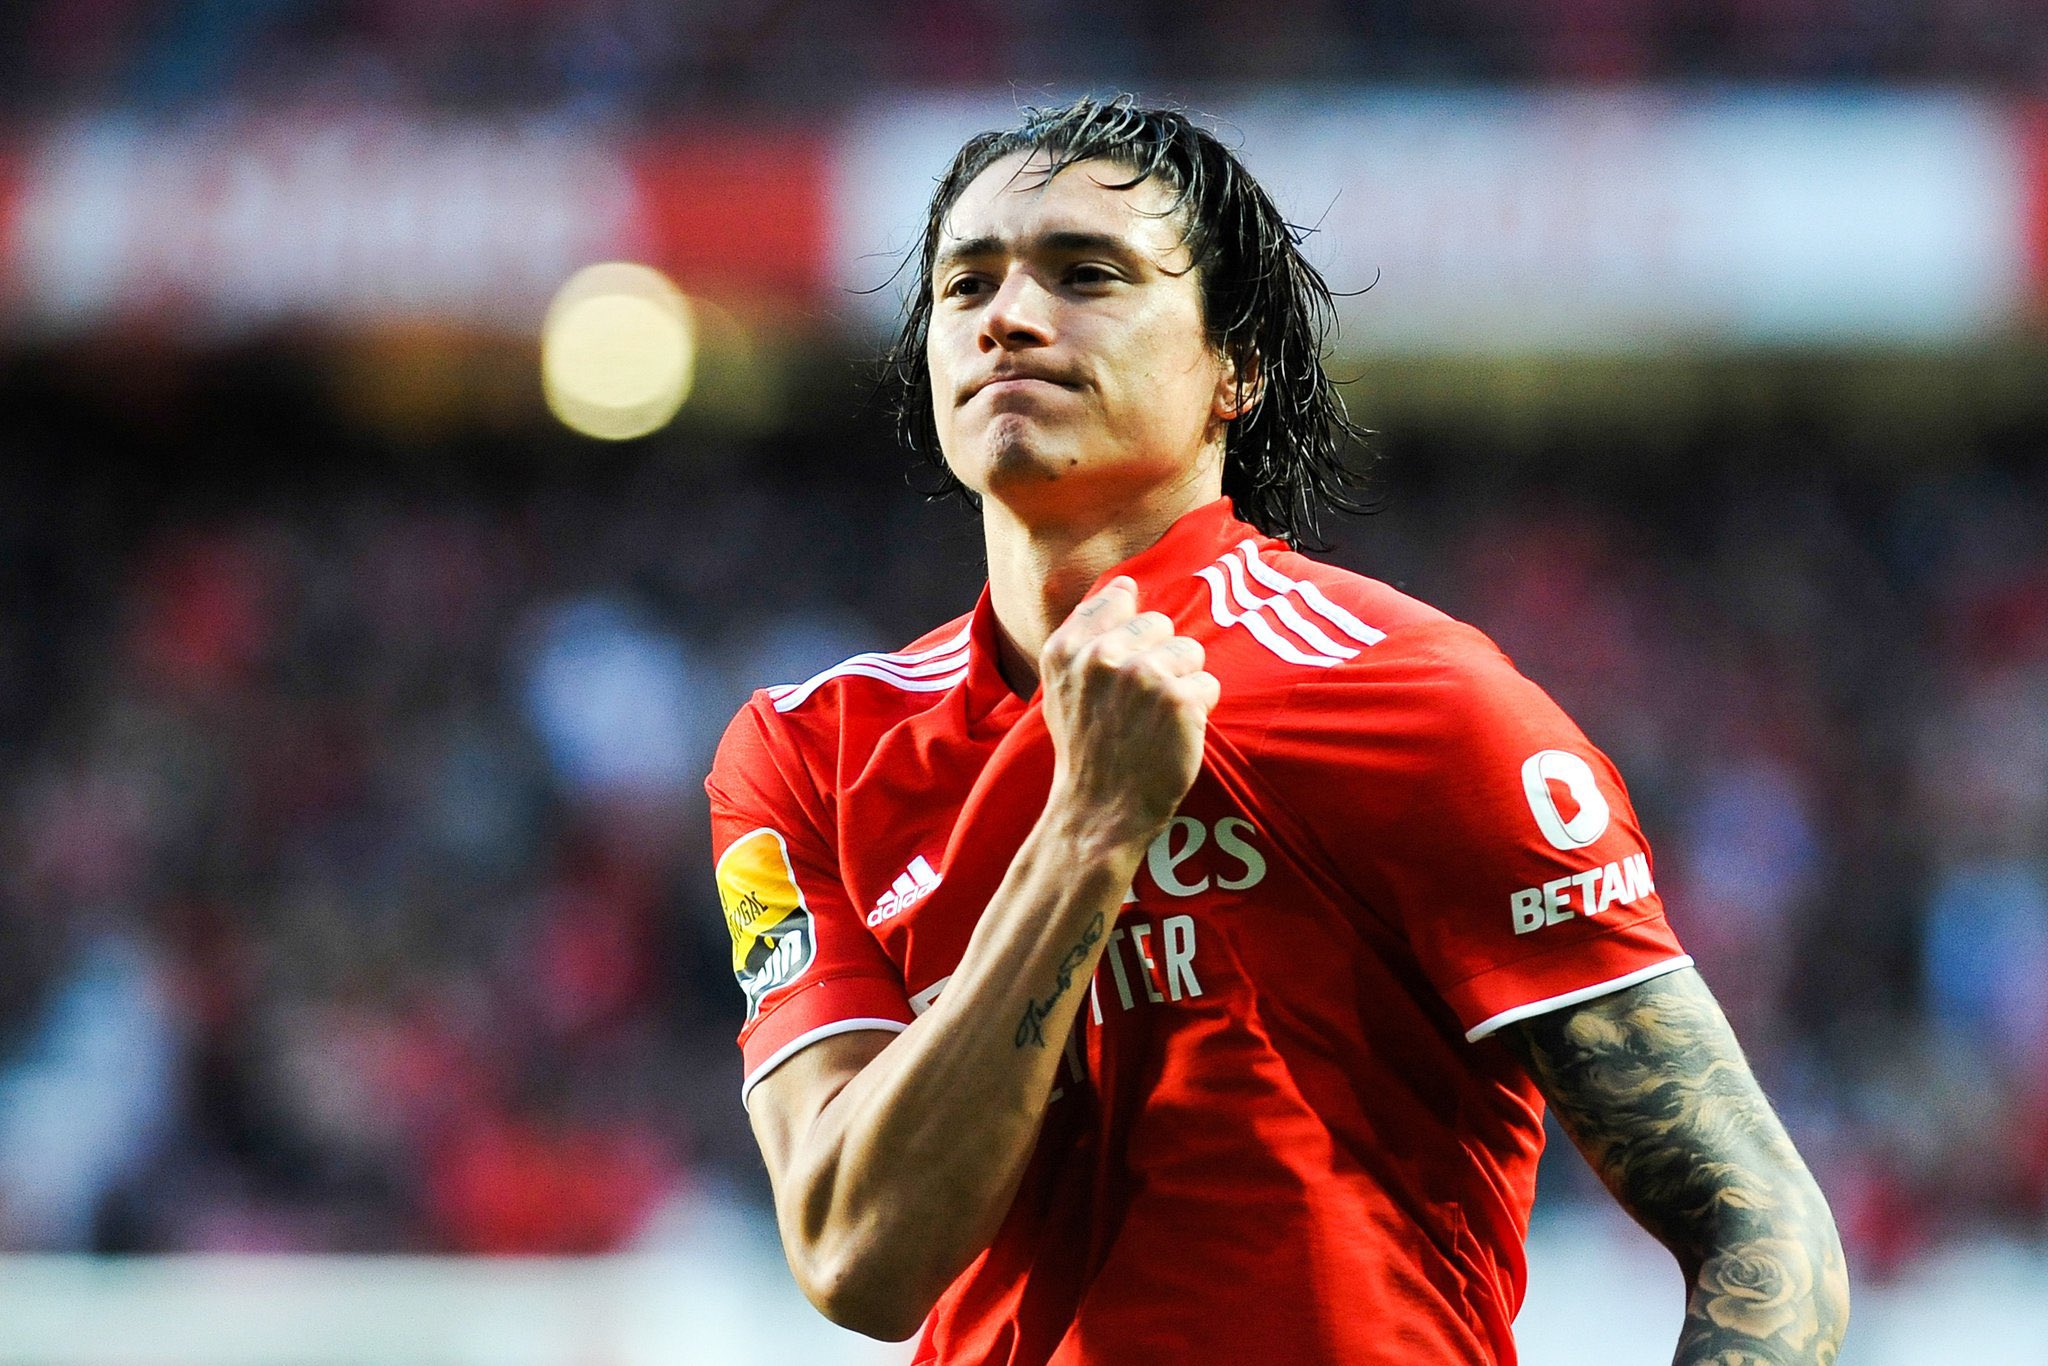 Benfica striker